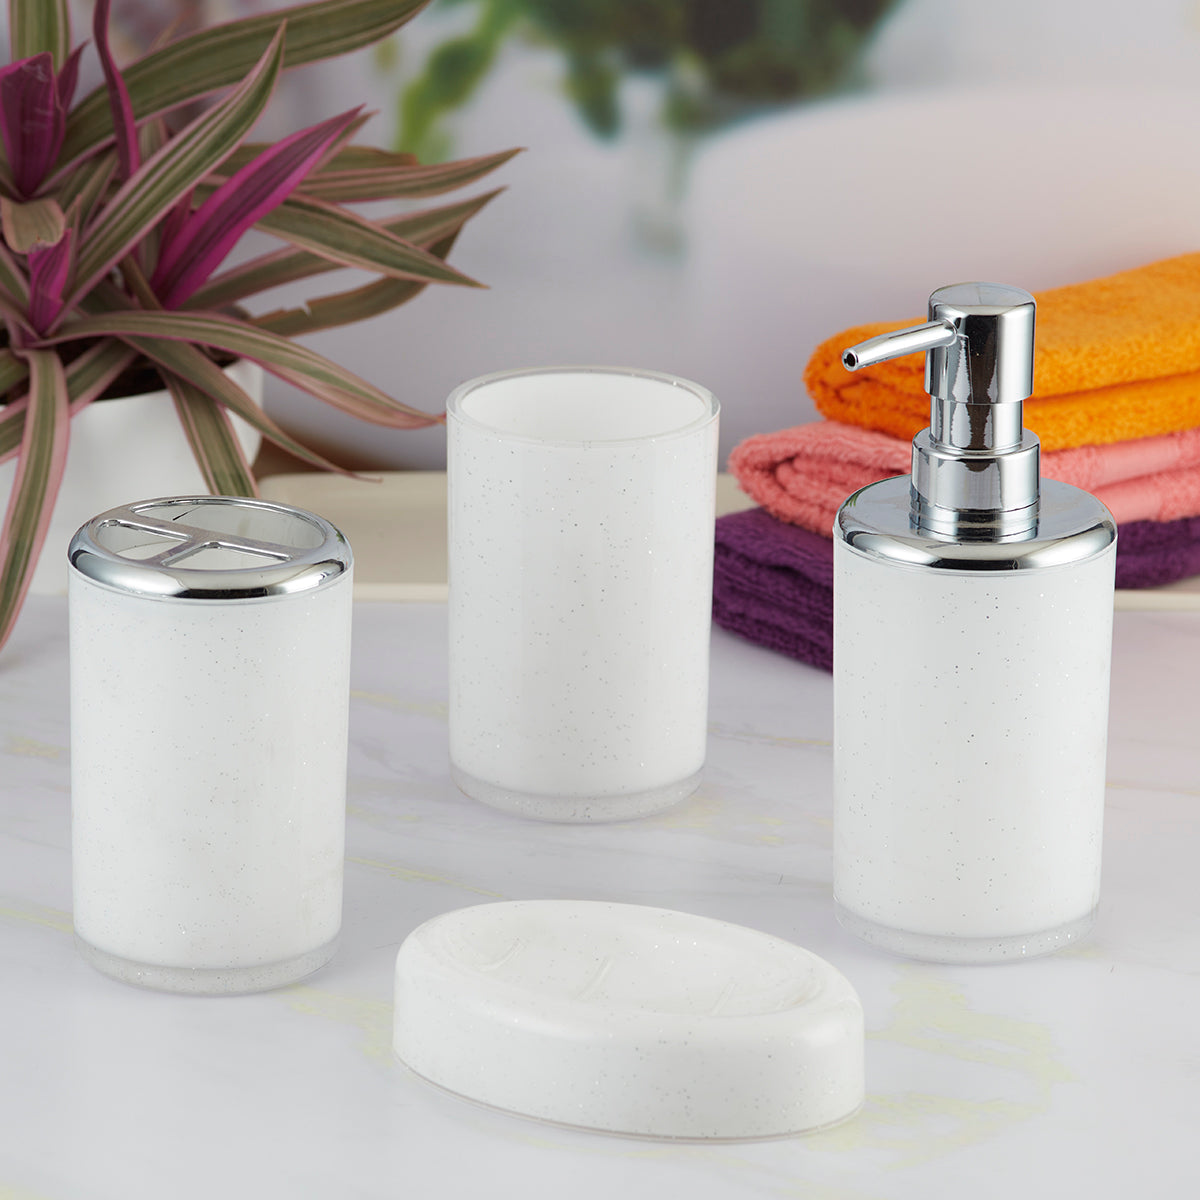 Acrylic Bathroom Accessories Set of 4 Bath Set with Soap Dispenser (10050)